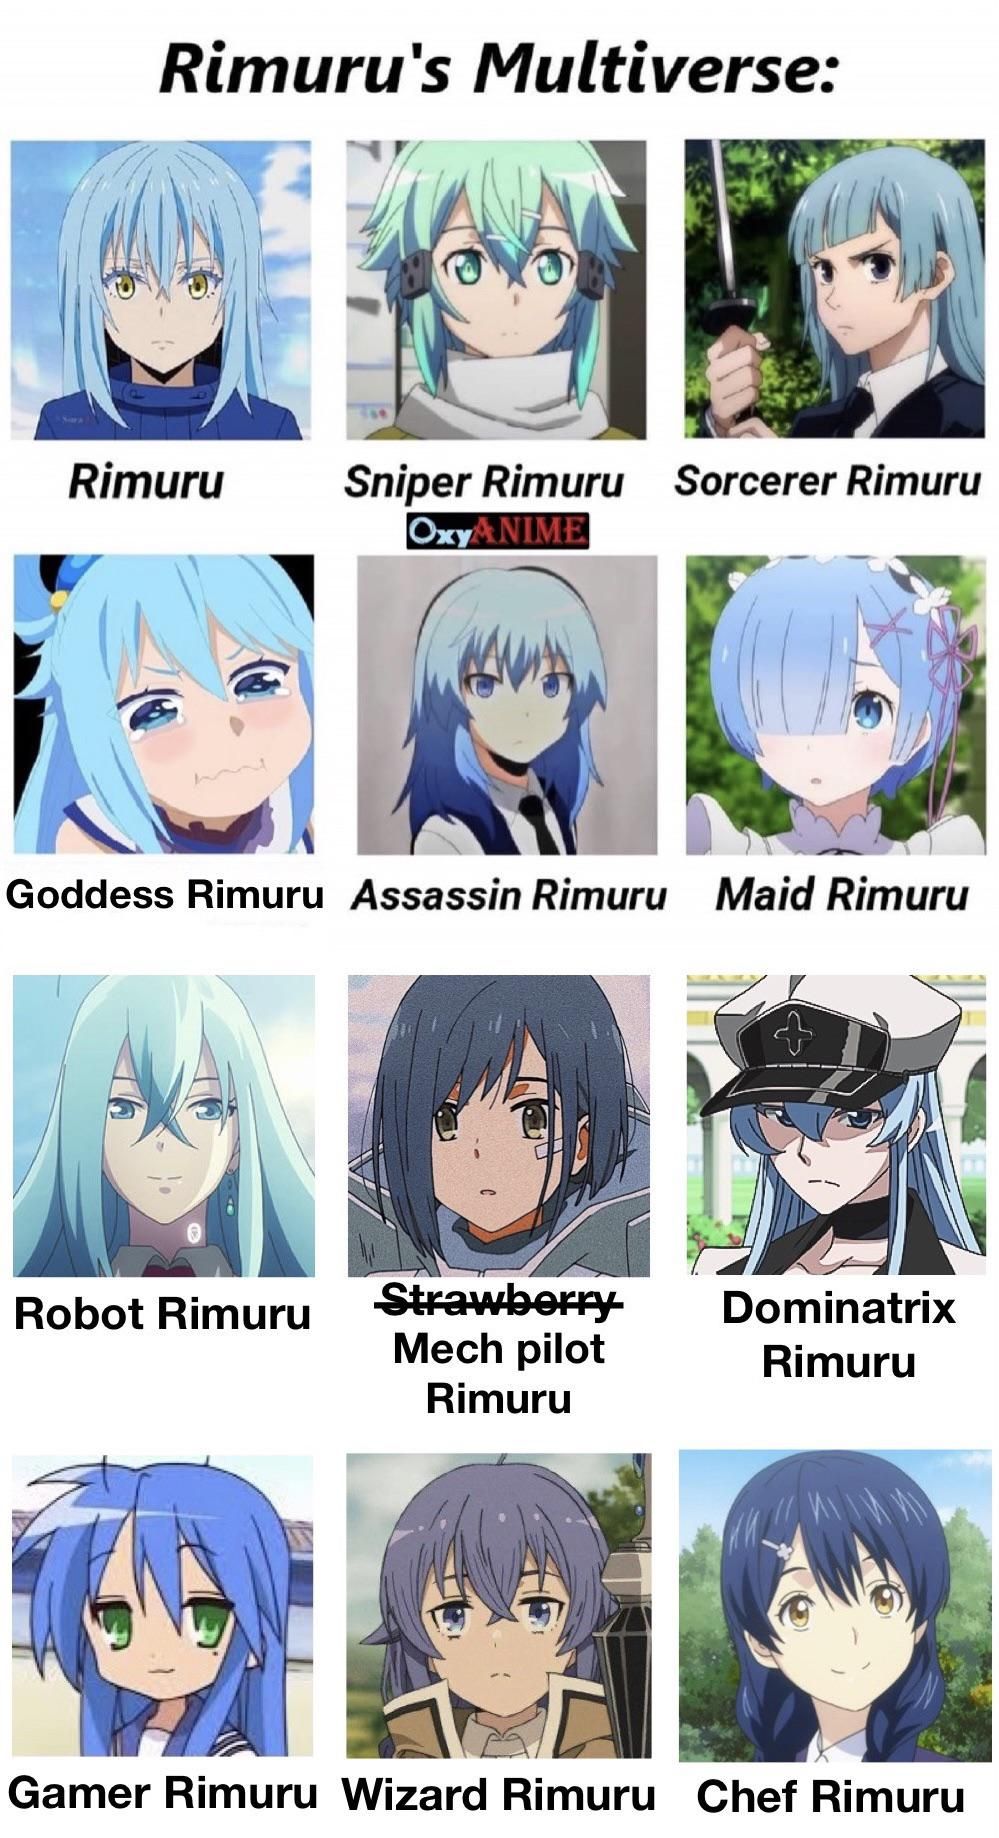 Rimuru is everywhere